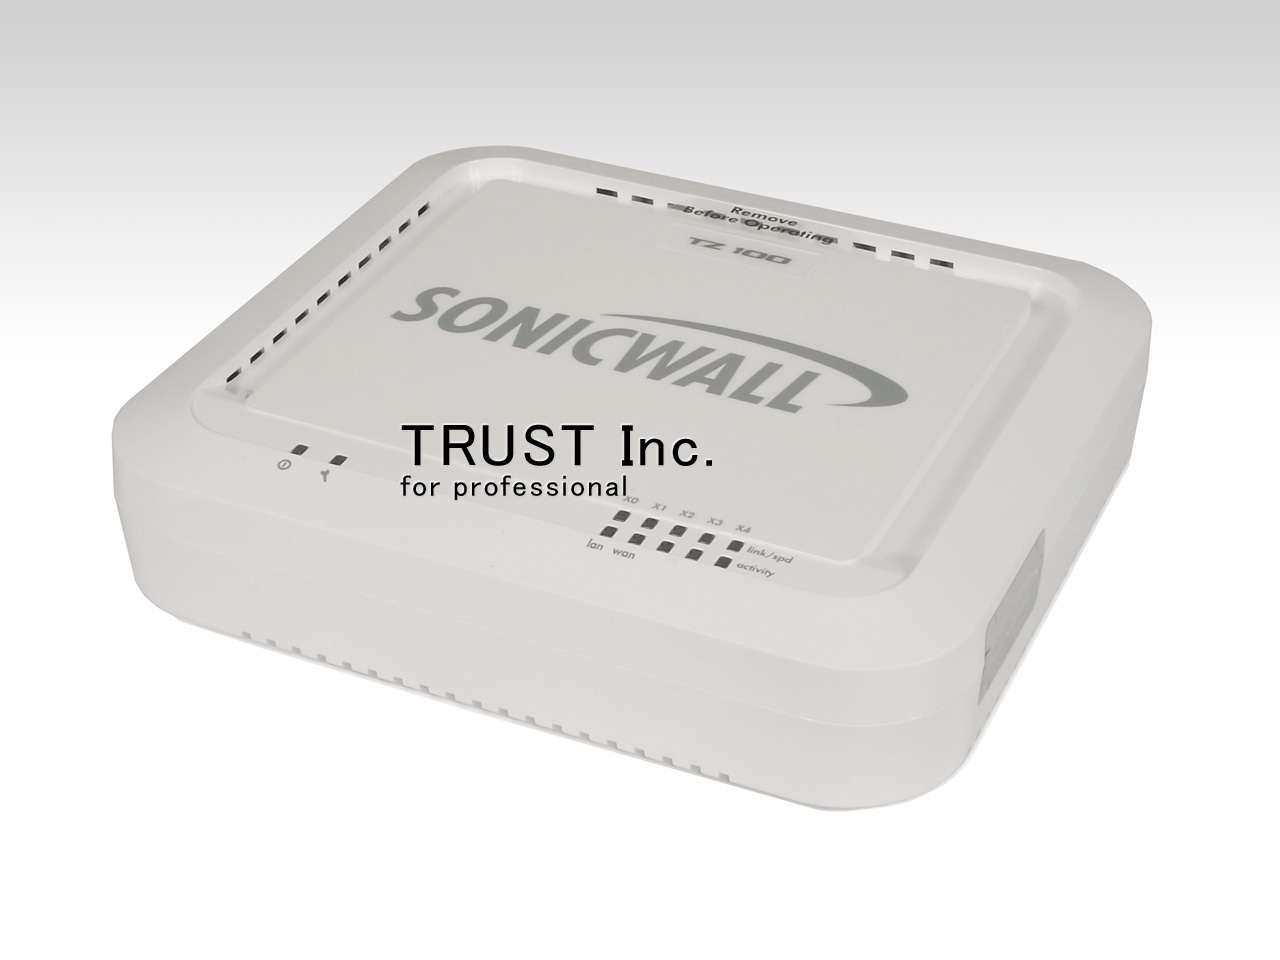 sonicwall tz100 console reset password factory default